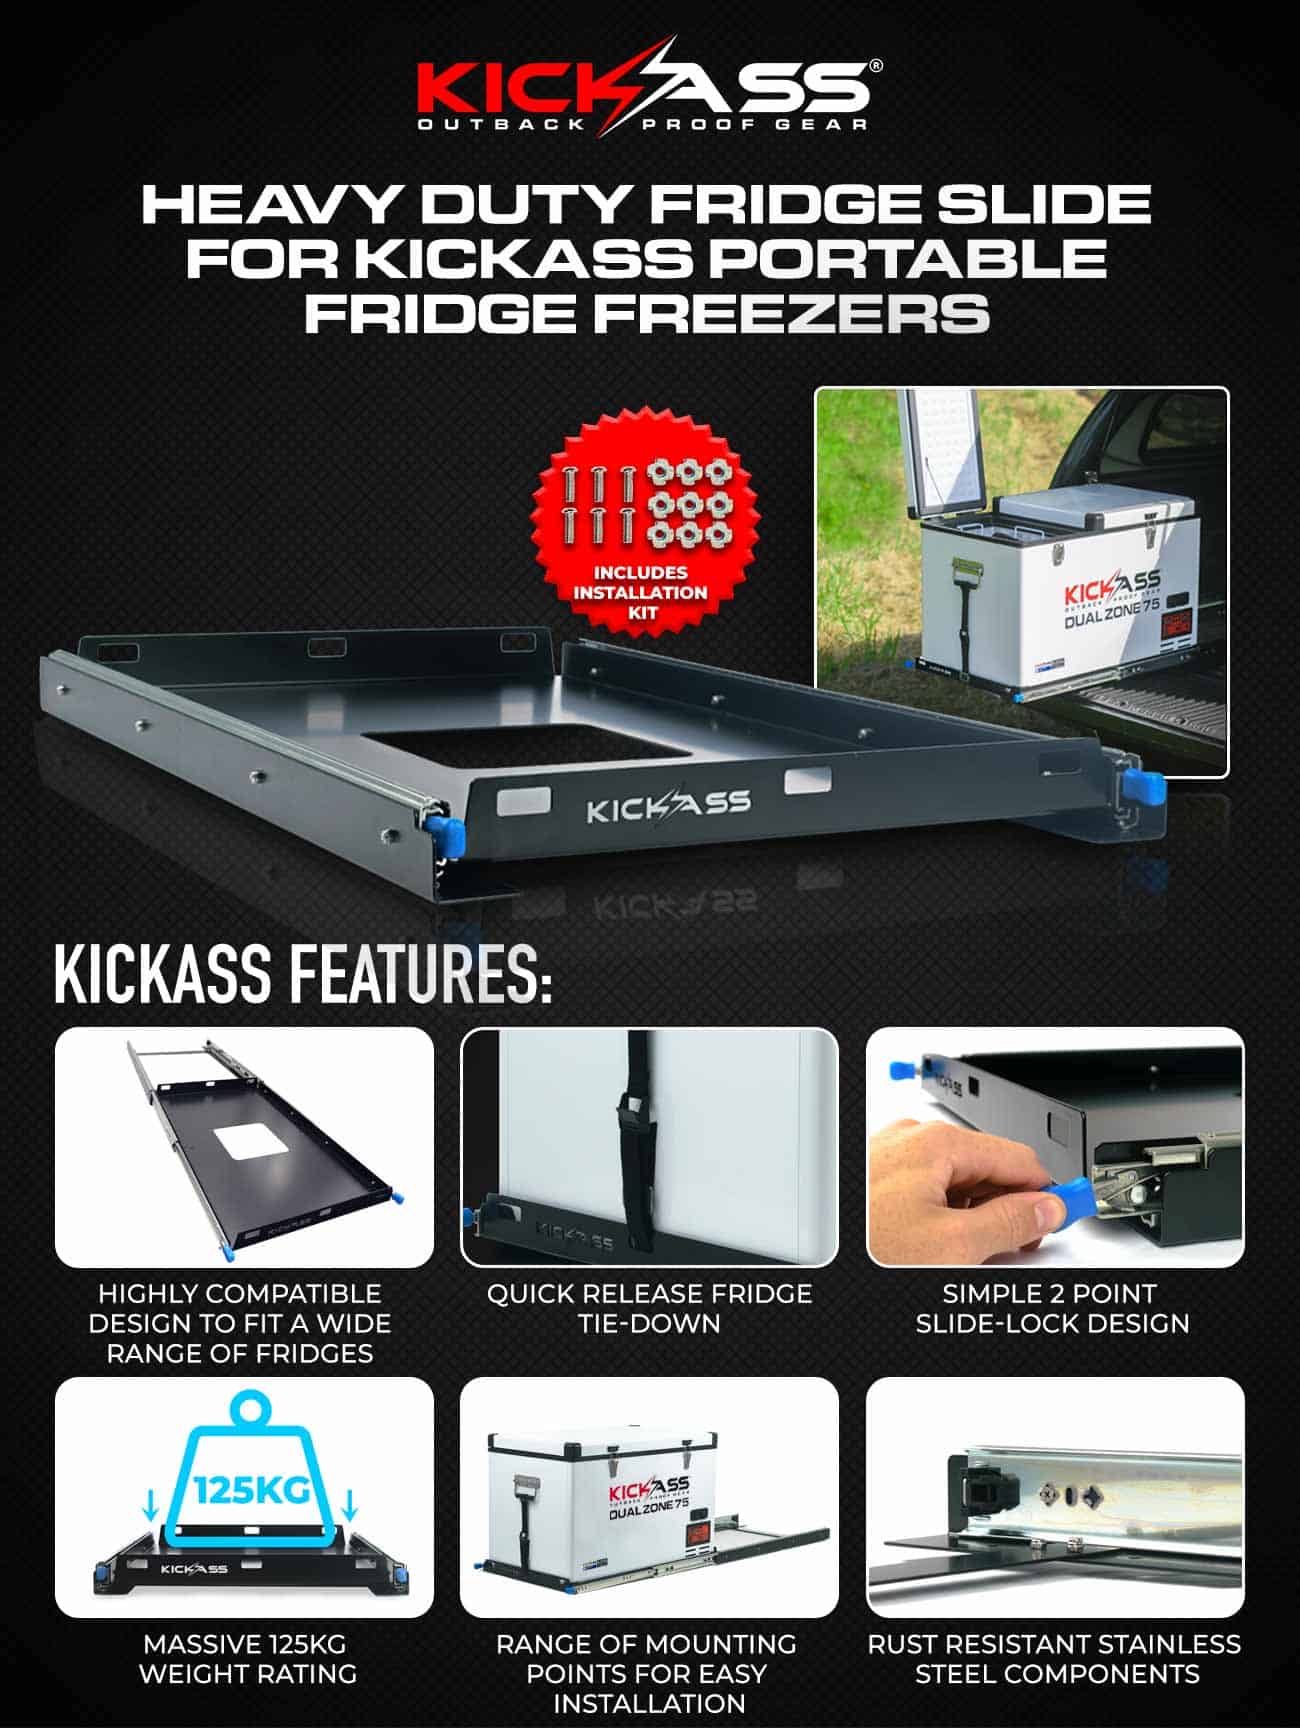 KASLIDEST - KICKASS Heavy Duty Fridge Slide for KickAss Portable Fridge Freezers